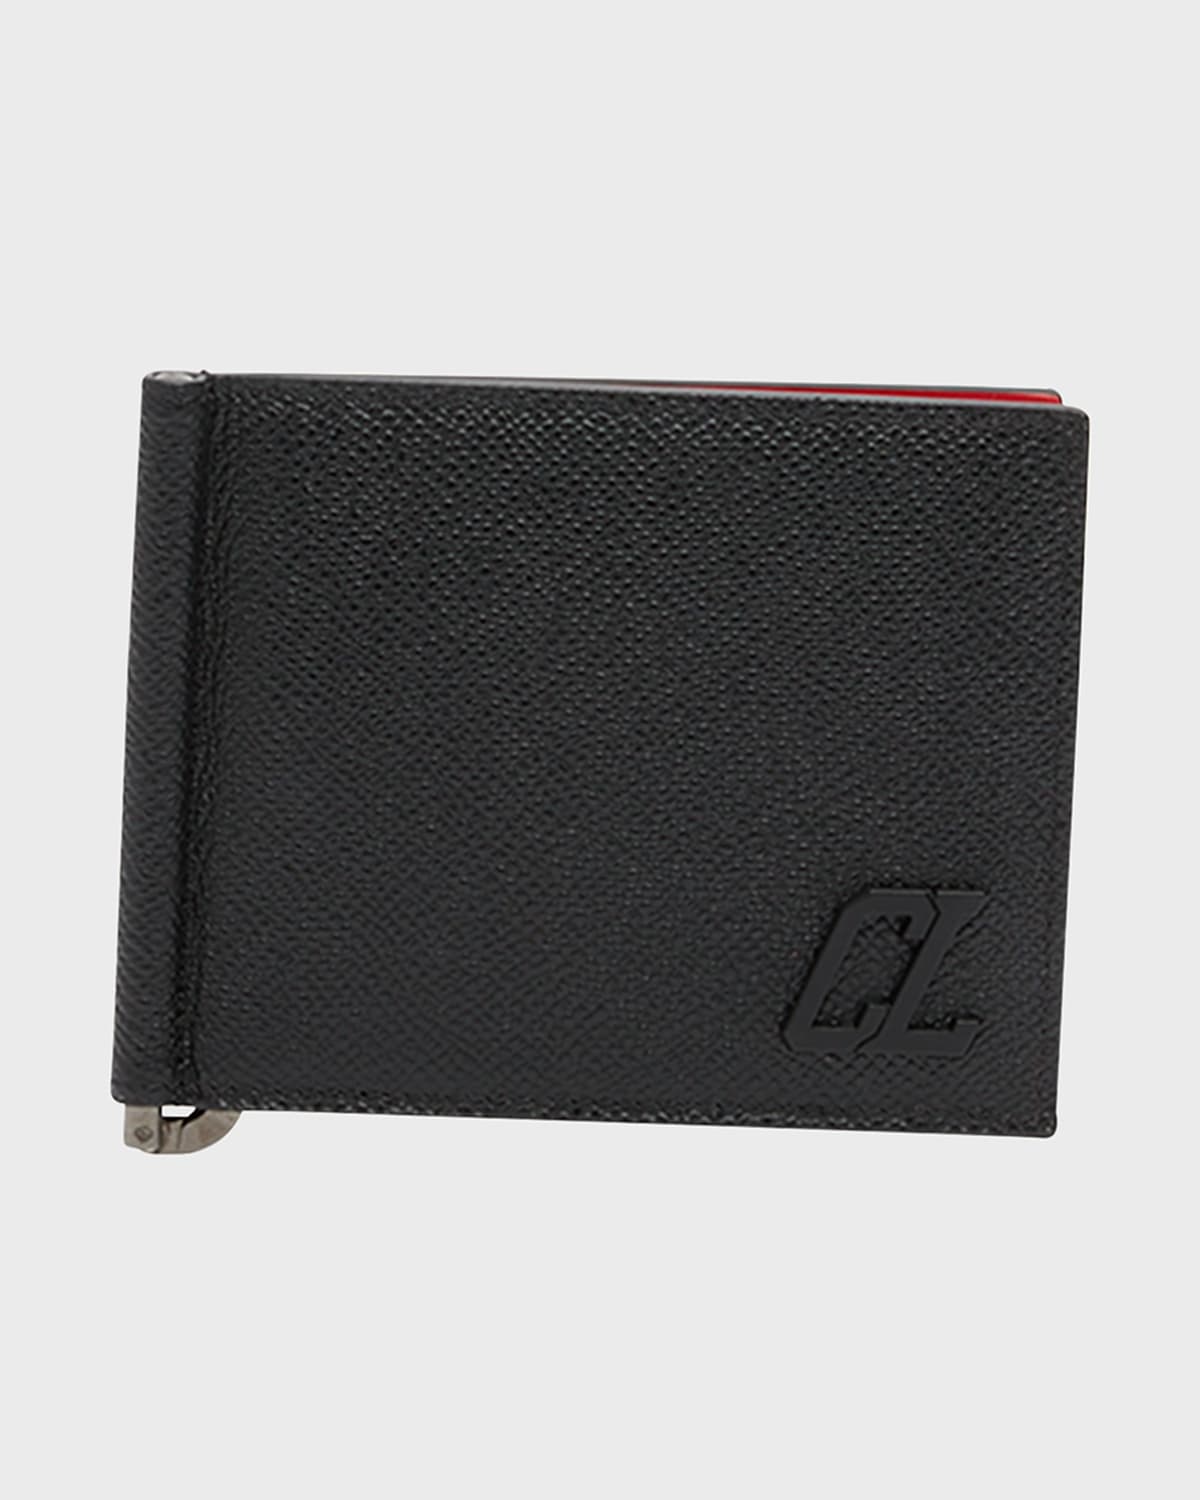 Christian Louboutin Men's Groovy Money Clip Wallet In Black/black